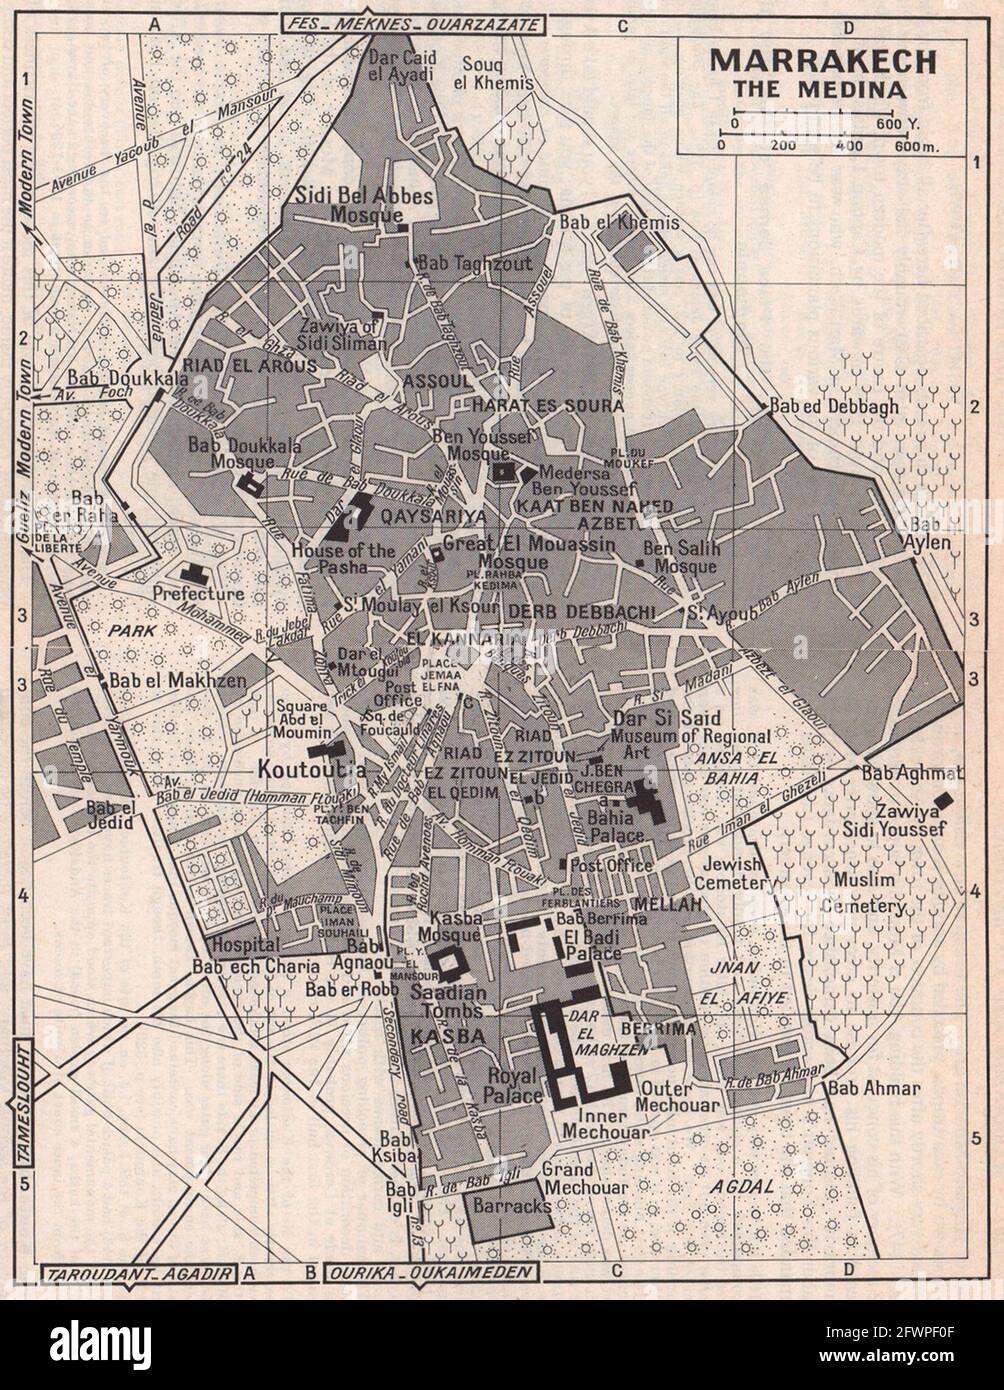 Marrakech - the Medina vintage town city tourist plan. Morocco 1966 old map Stock Photo